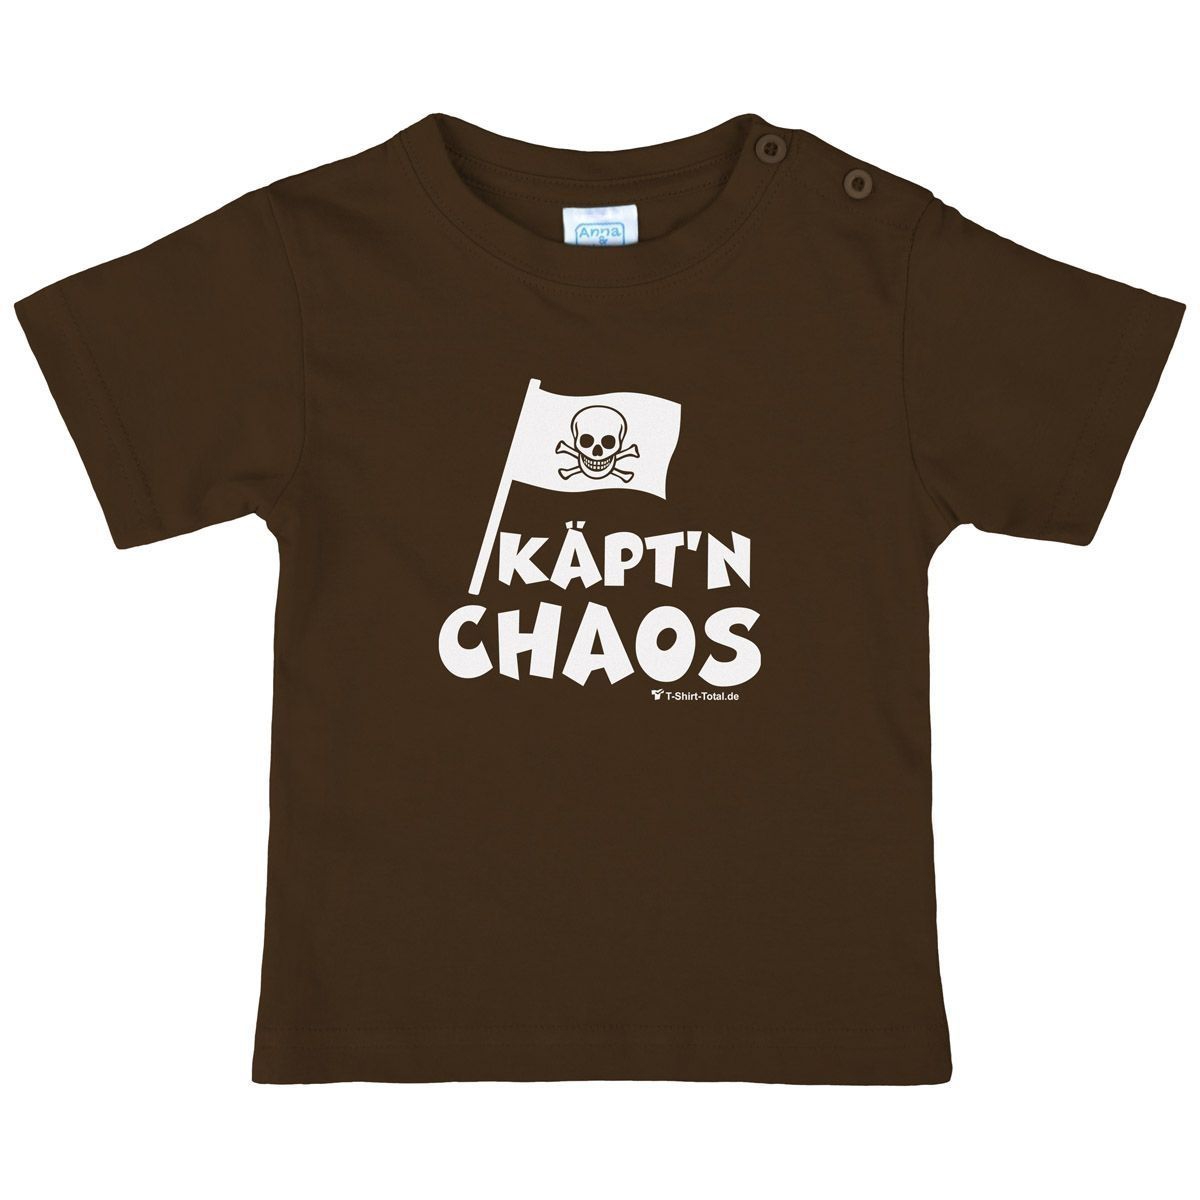 Käptn Chaos Kinder T-Shirt braun 104